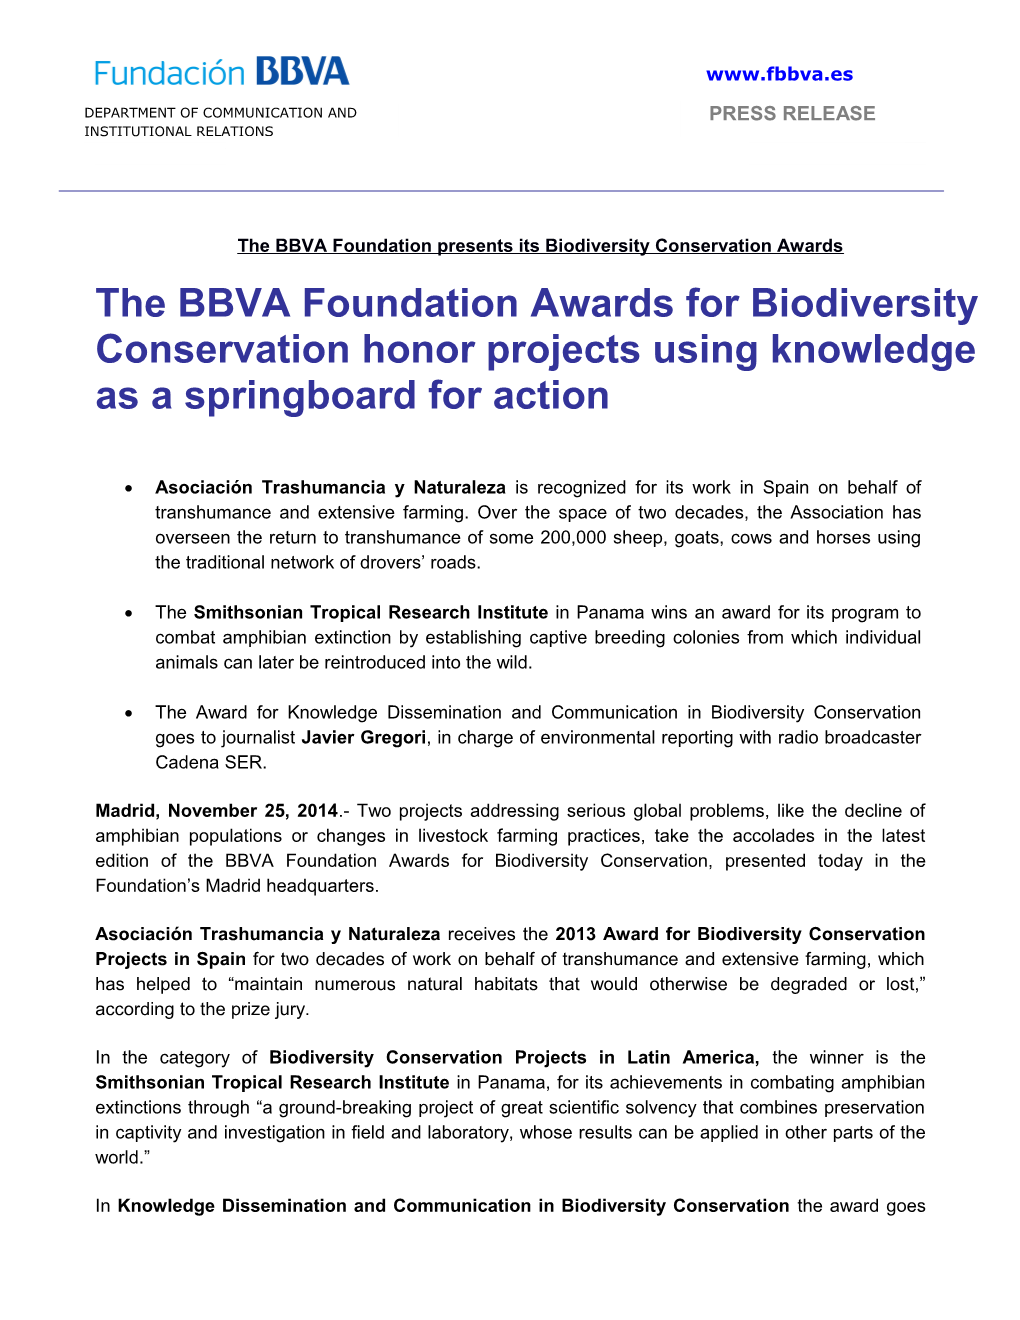 Thebbva Foundation Presents Its Biodiversity Conservation Awards